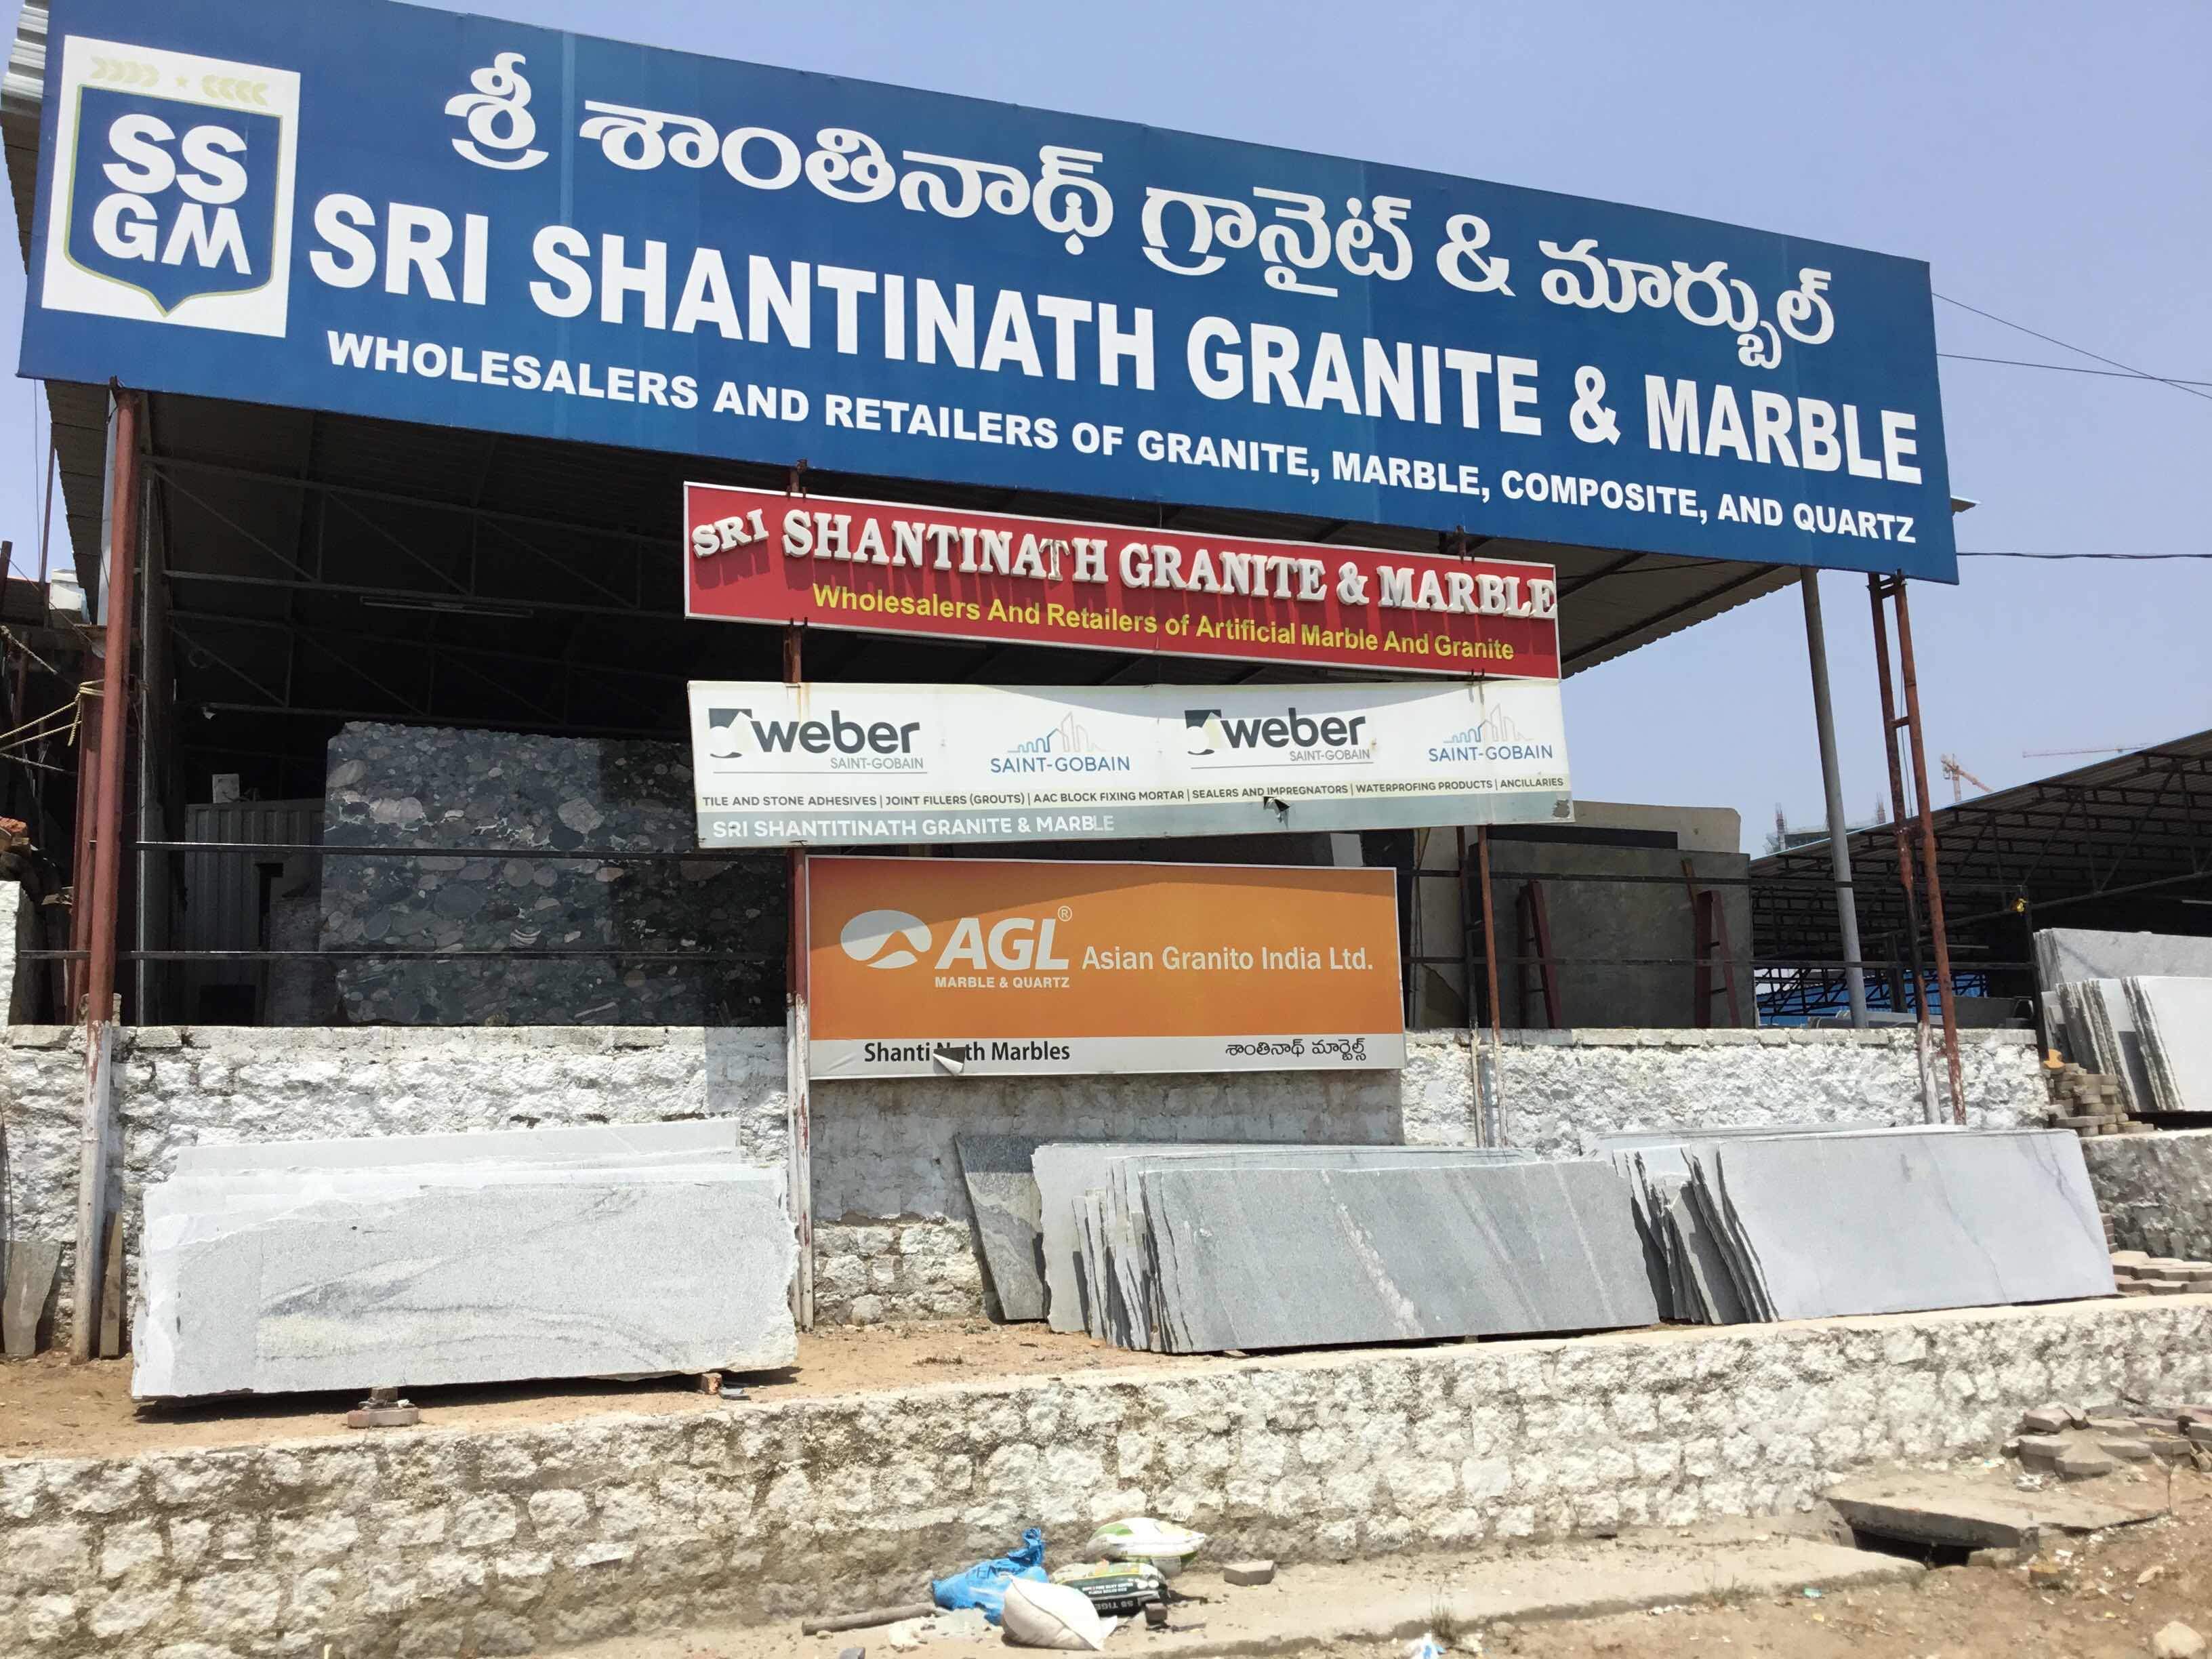 Sri Shanthinath Granite & Marble